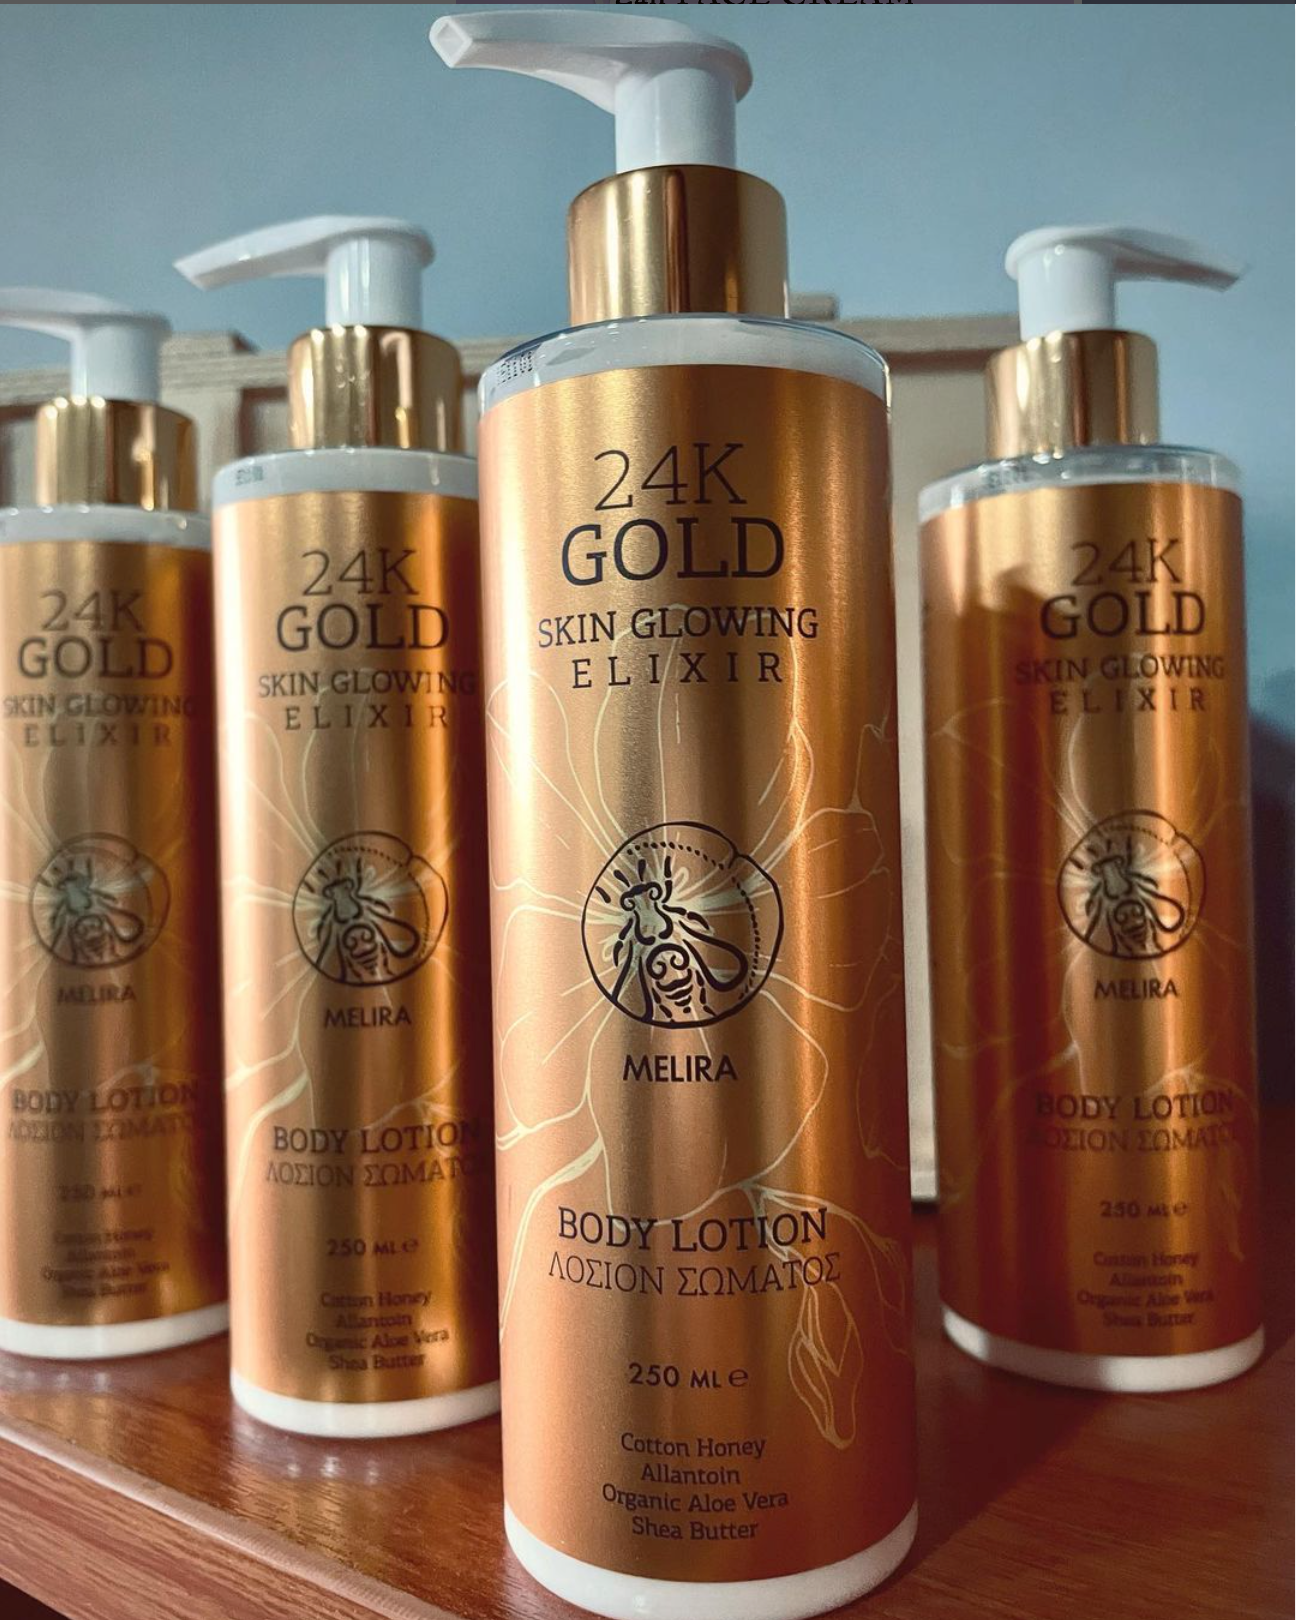 24K GOLD Skin Glowing Elixir Body Lotion 250ml / 8.4 fl. oz.